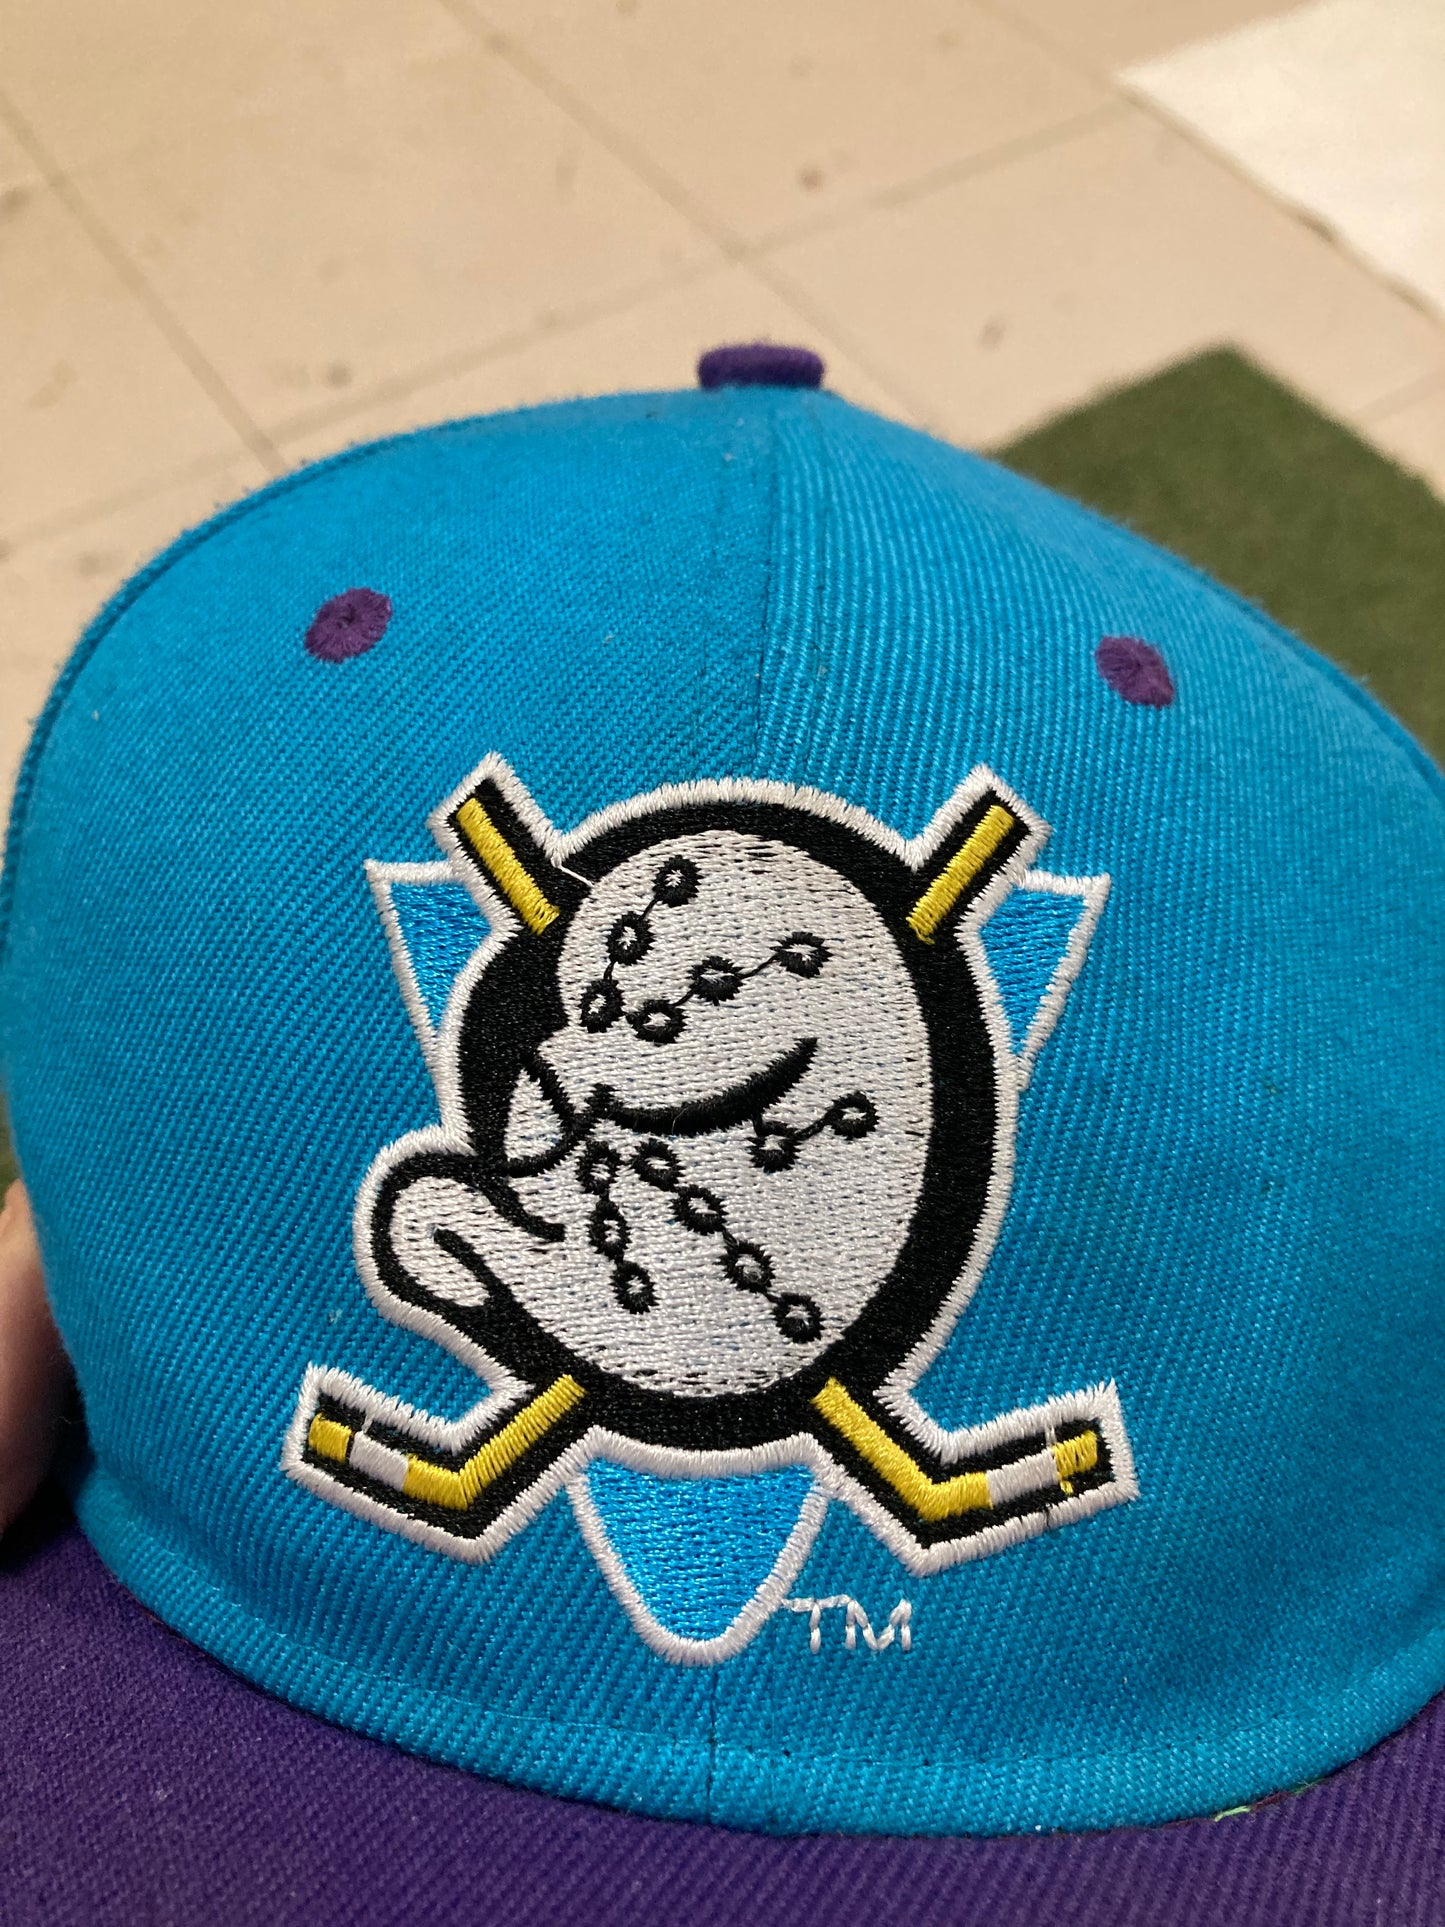 Sport Specialties Mighty Ducks 'Logo Embroidered' Cap